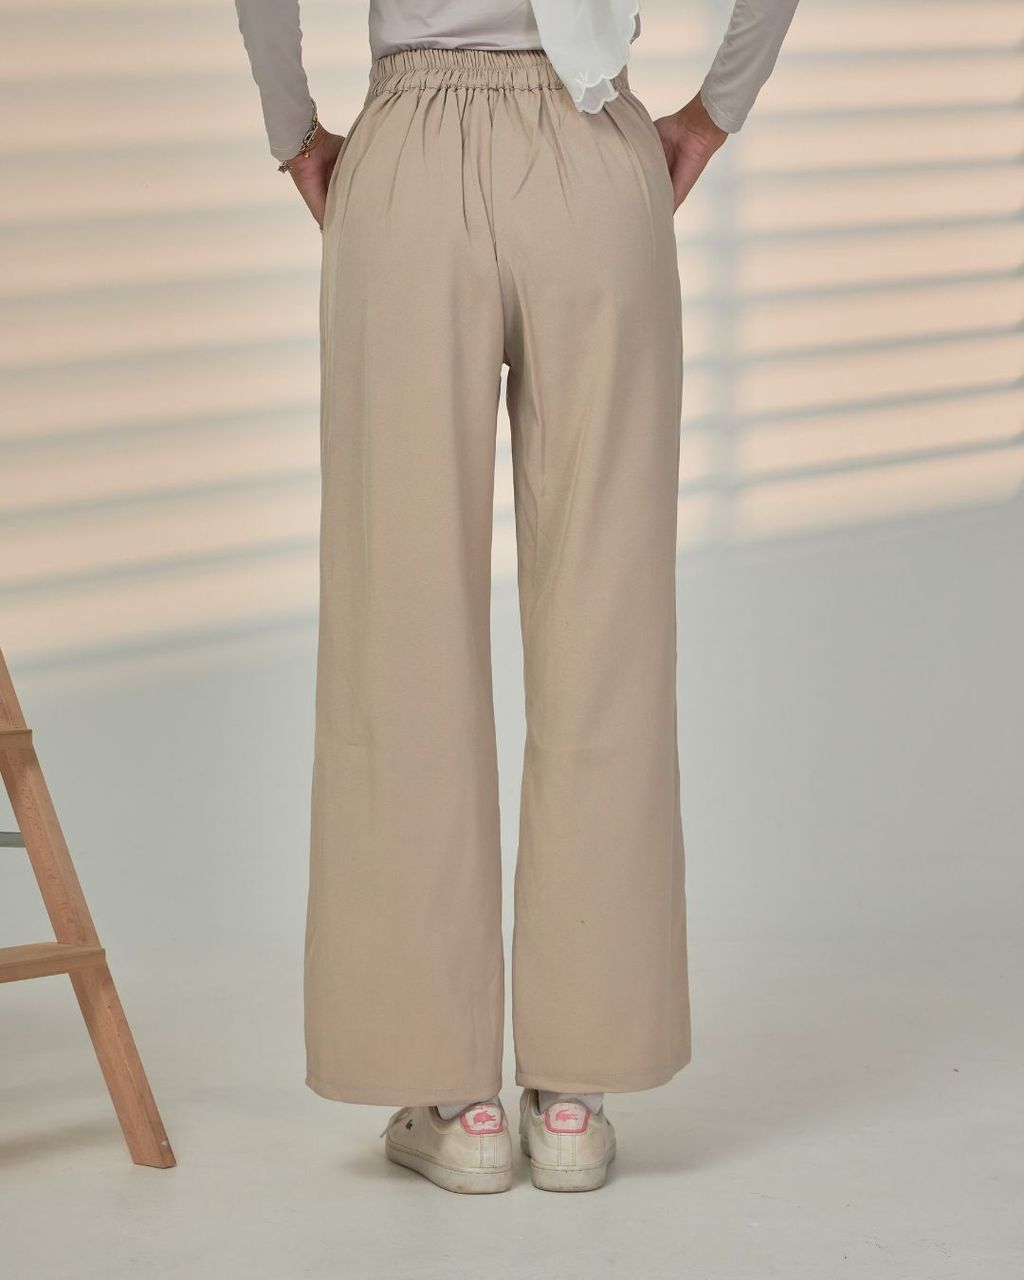 haura-wear-izzy-mix-cotton-skirt-high-waist-cotton-long-pants-seluar-muslimah-seluar-perempuan-palazzo-pants-sluar-skirt (15)